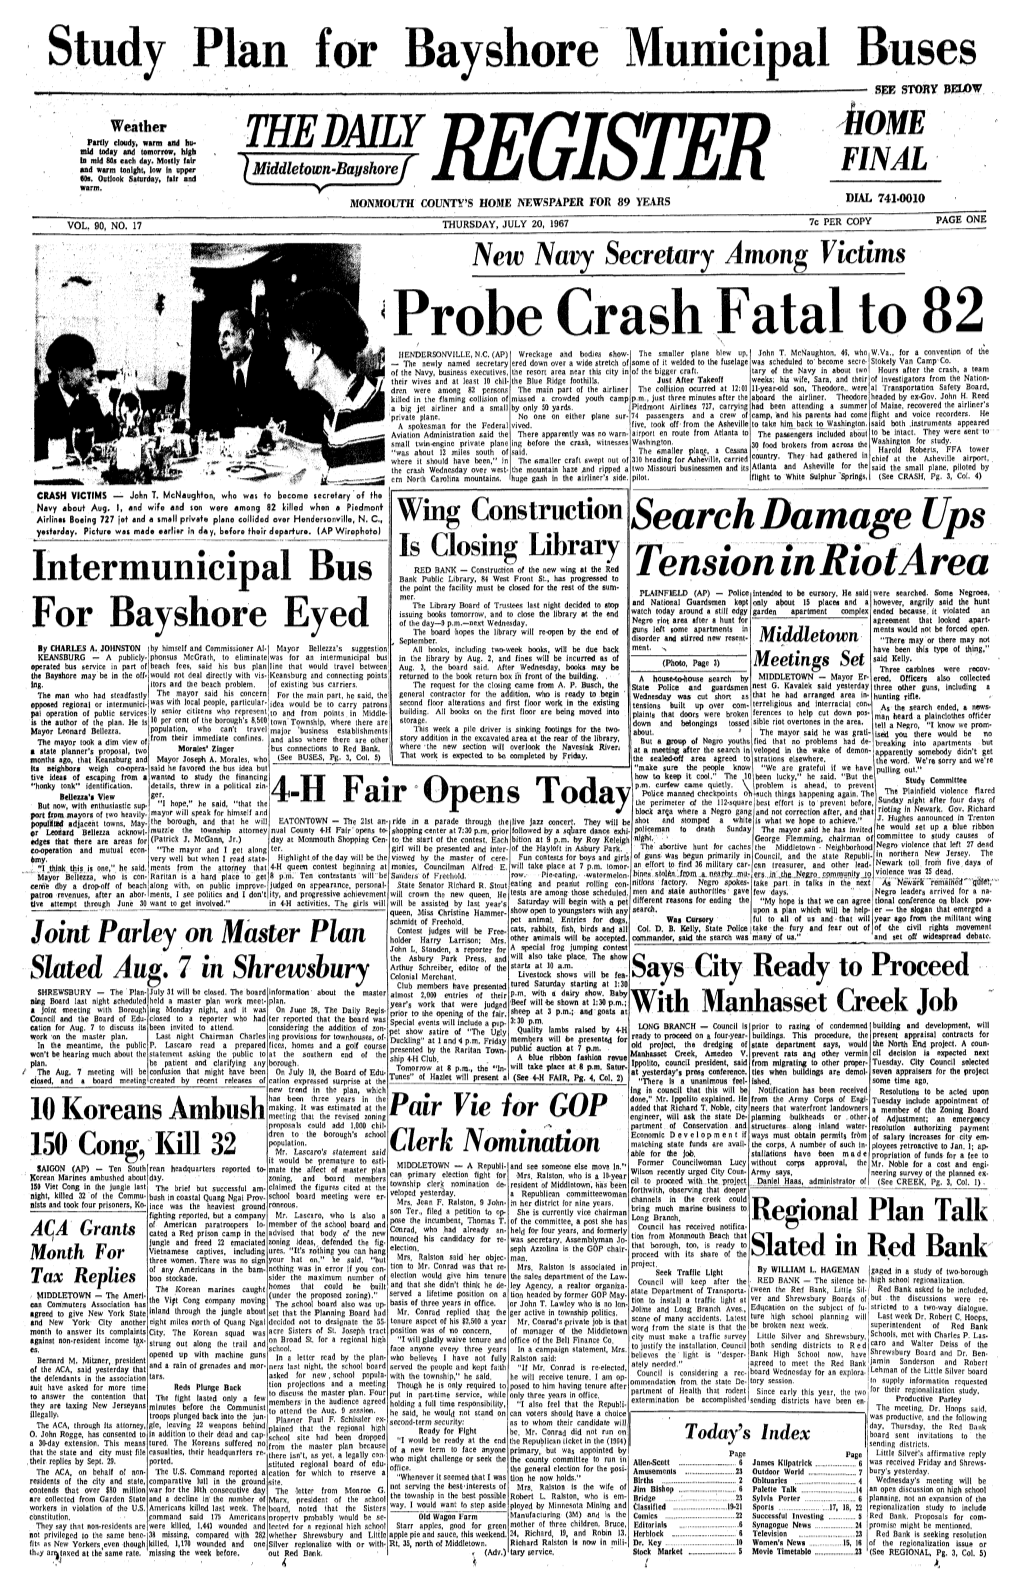 Probe Crash Fatal to 82 HENDERSONVILLE, N.C